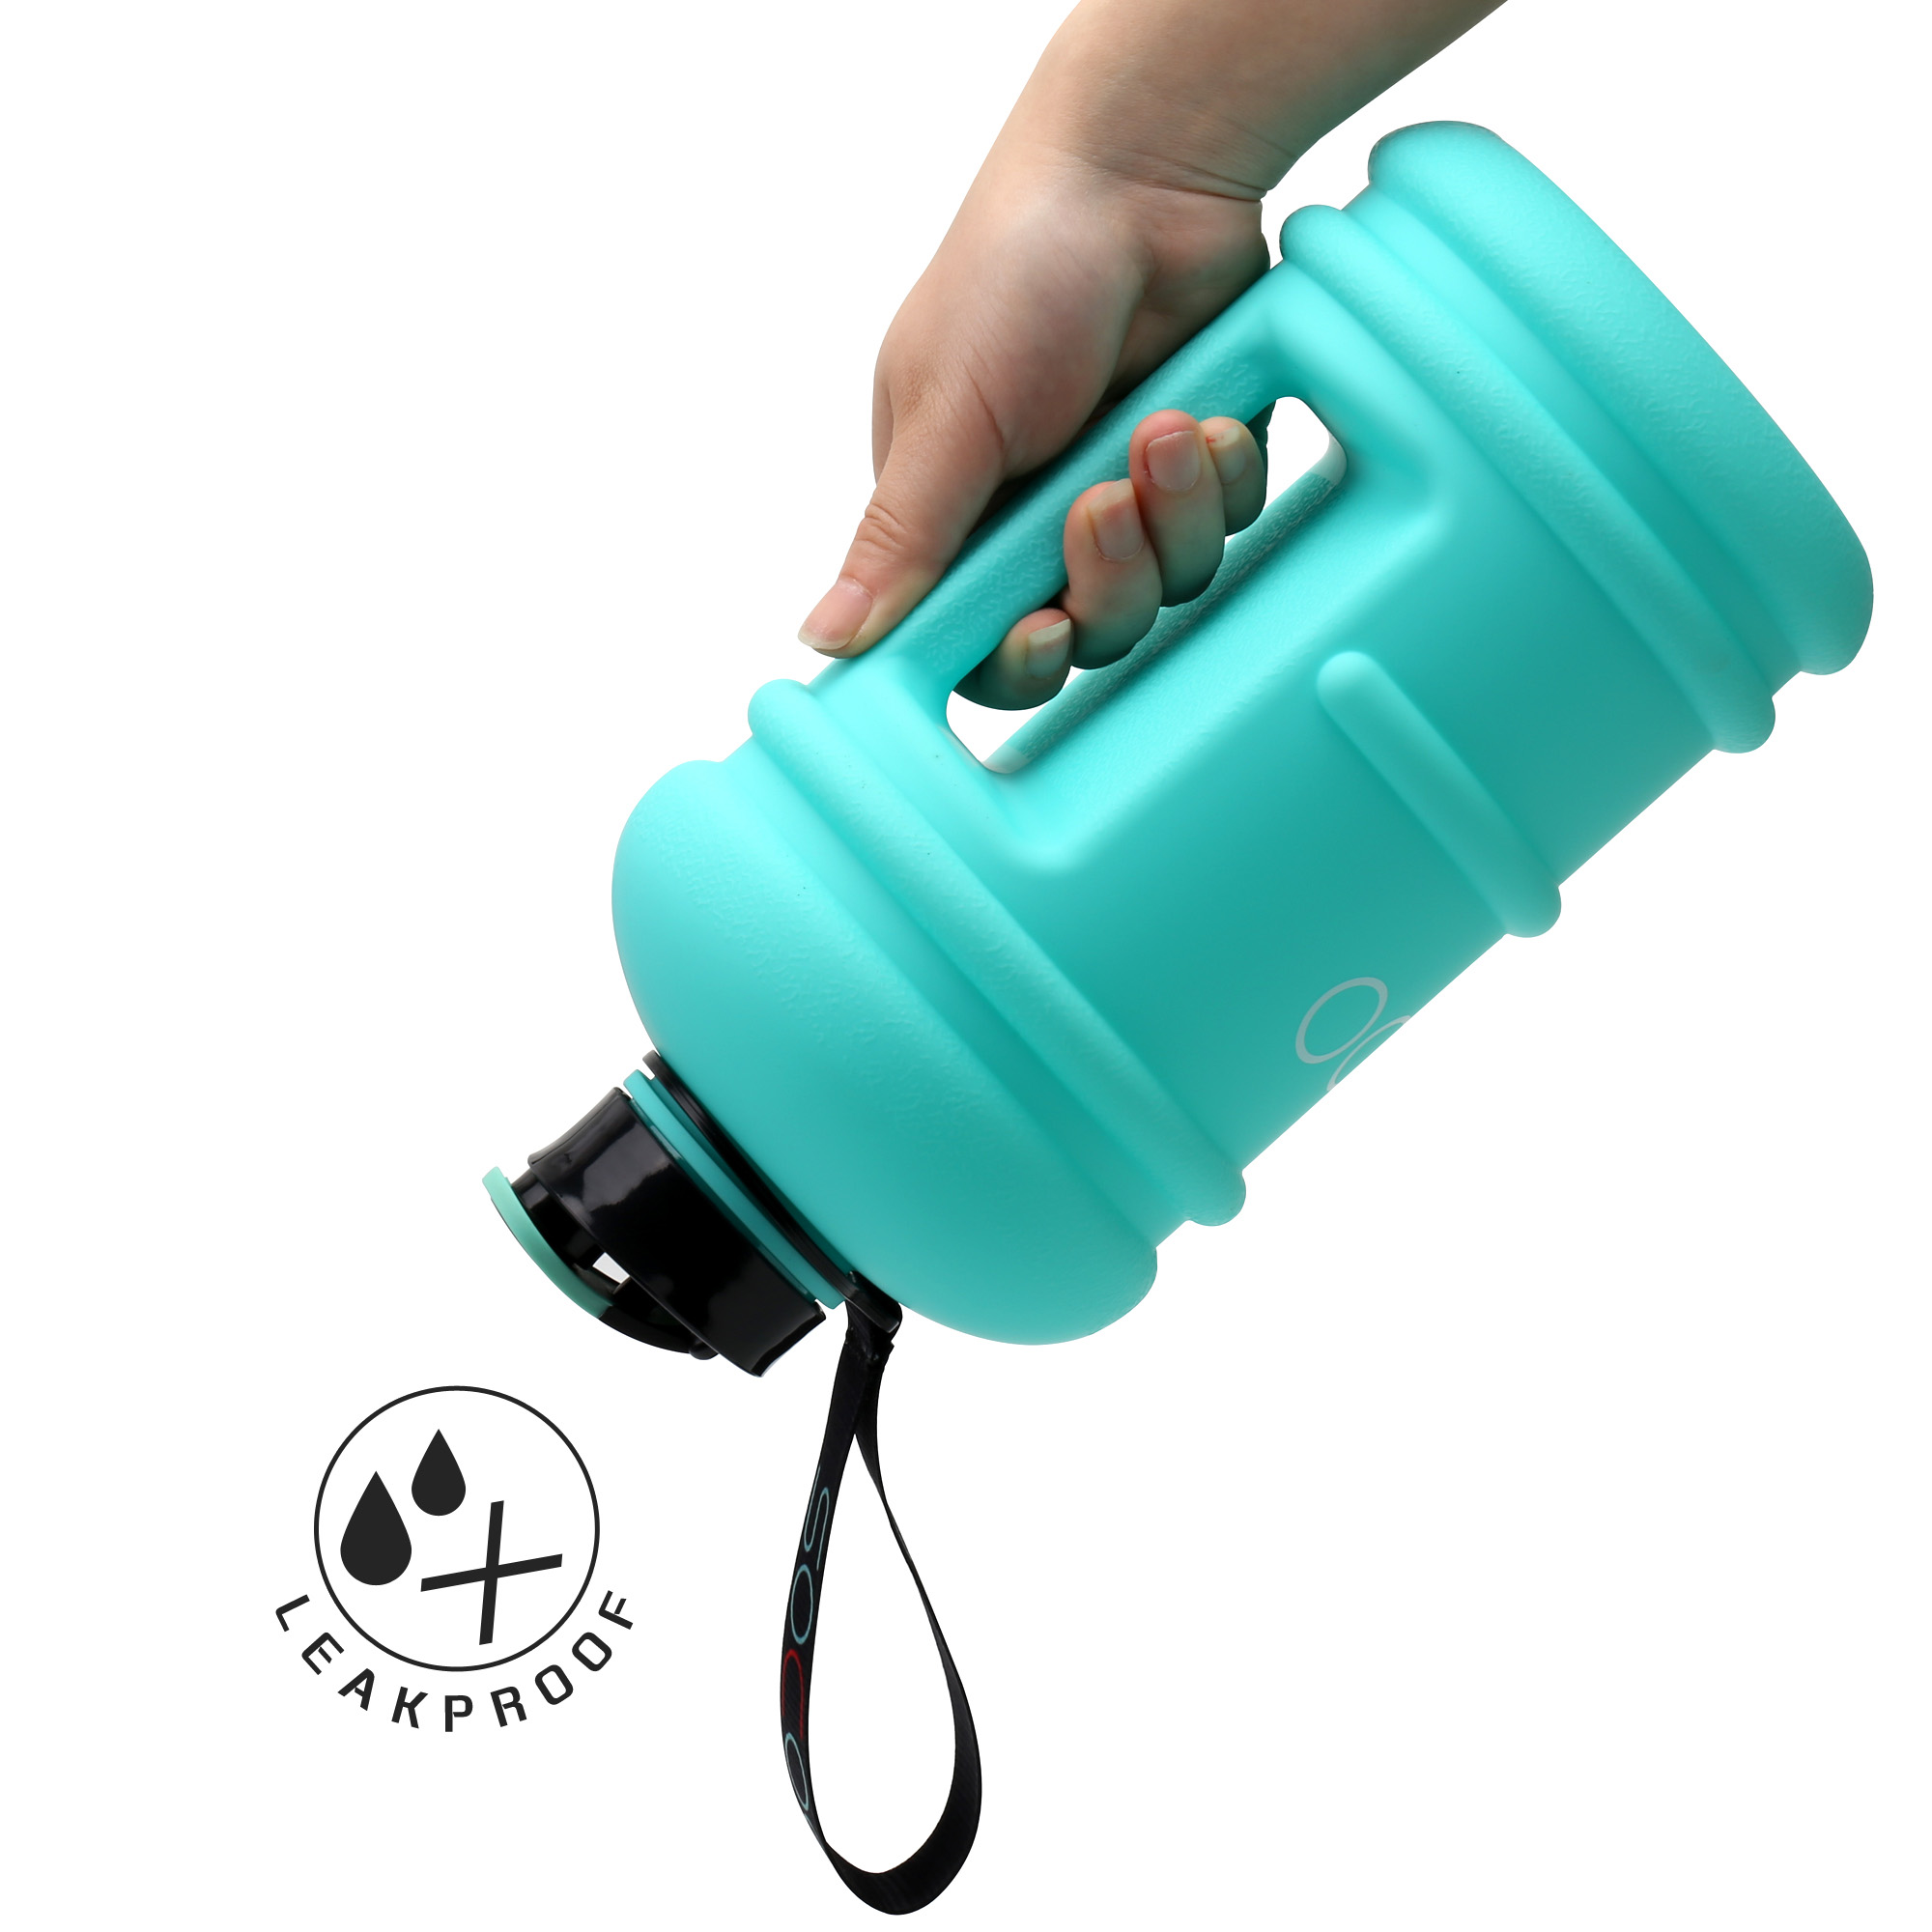 FUNUS Big Water Bottle BPA Free Half Gallon Water Bottle Jug with Straw for  Men Women Fitness Sport (Navy Blue, 2.2L) – SOCOO